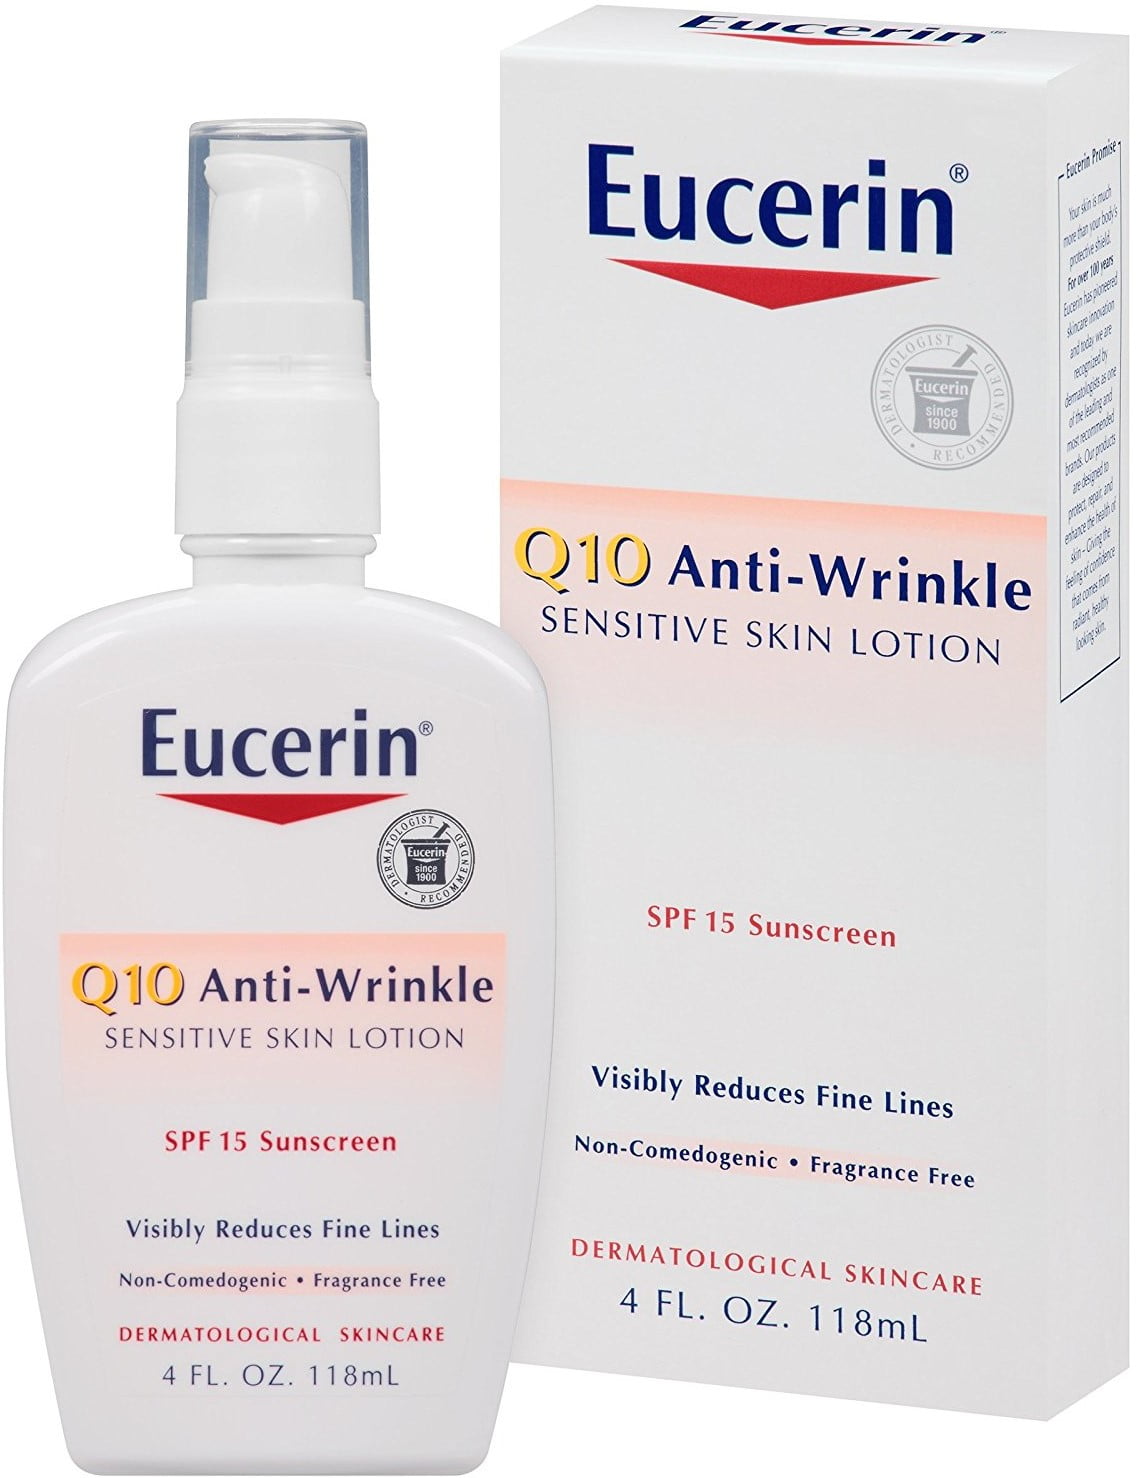 eucerin anti wrinkle face lotion